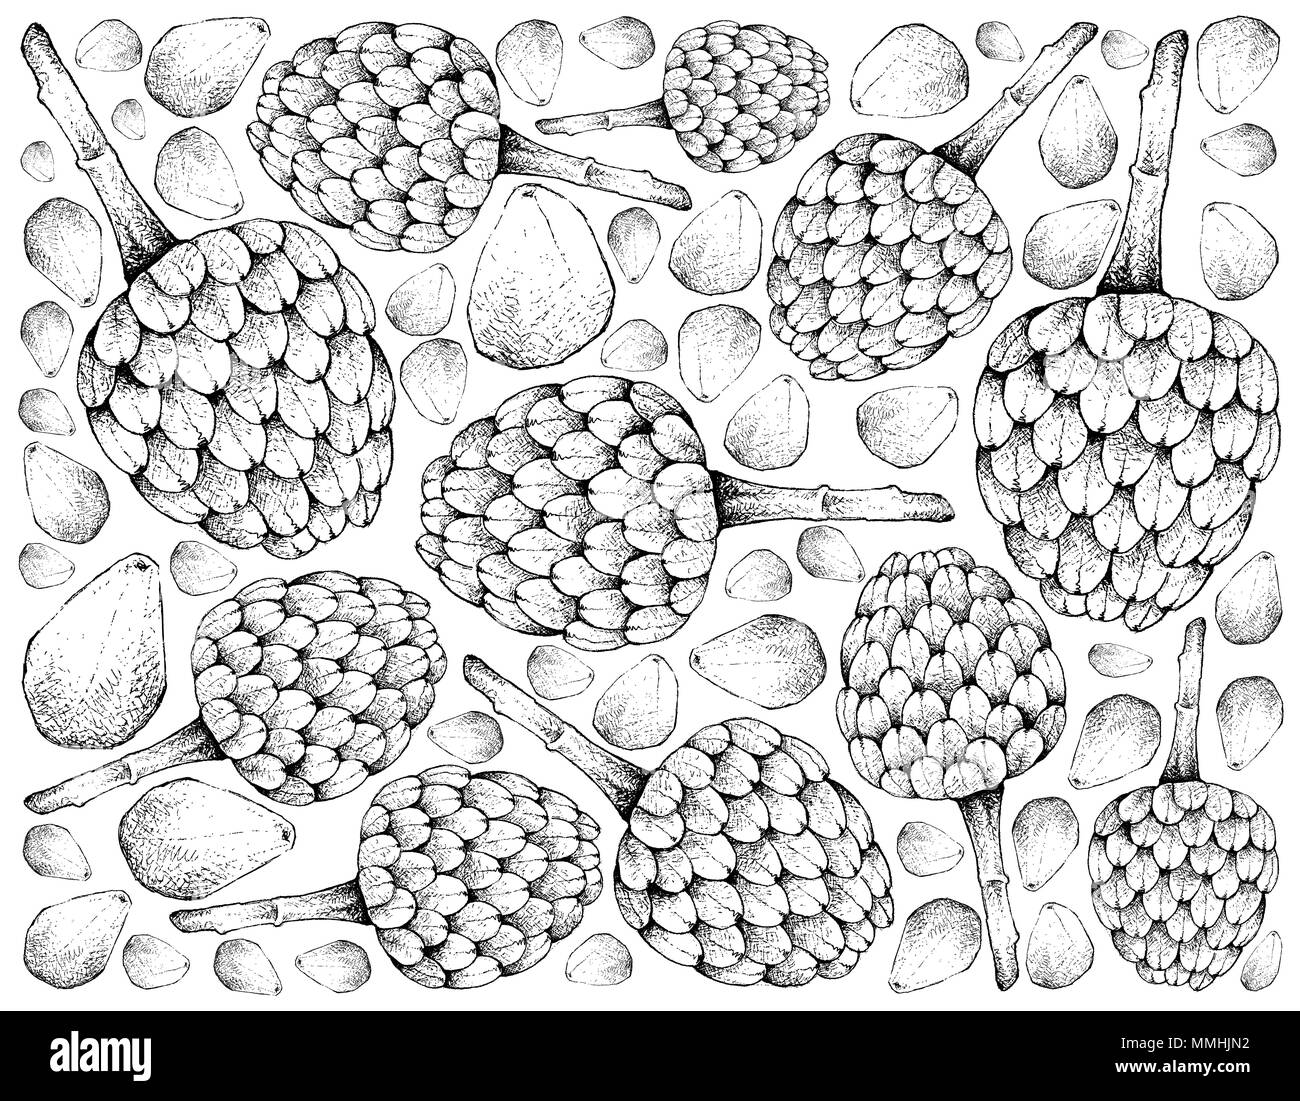 Tropical Fruit, Illustration Wallpaper of Hand Drawn Sketch of Cherimoya, Annona Cherimola and Cempedak or Artocarpus Integer Fruits Isolated on White Stock Photo